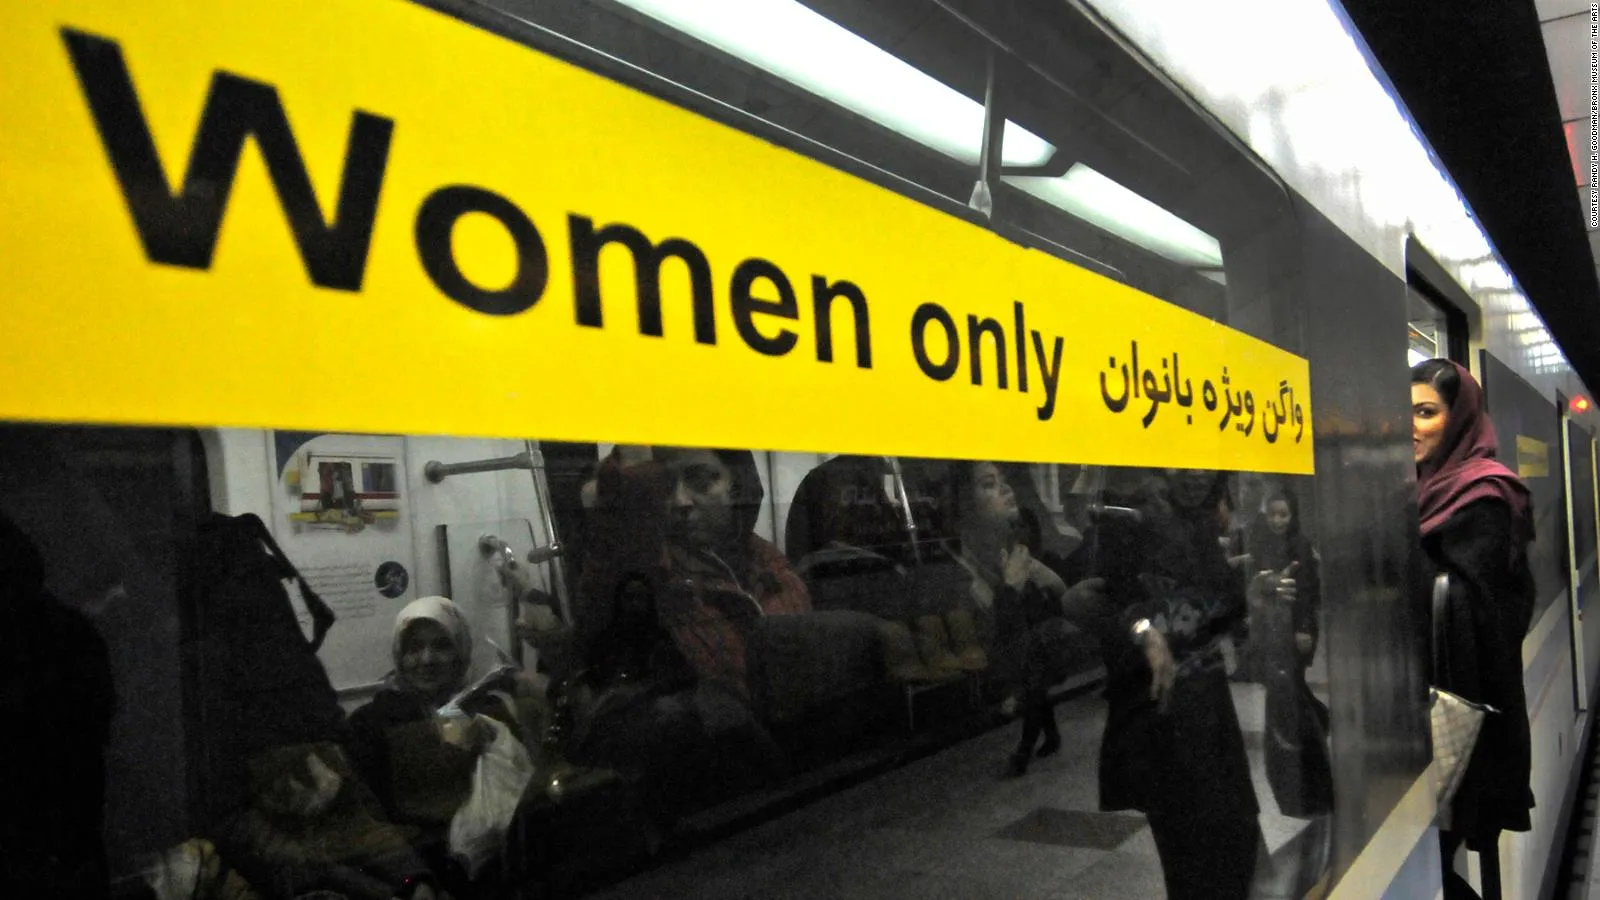 180620110955 01 iran women only full 169